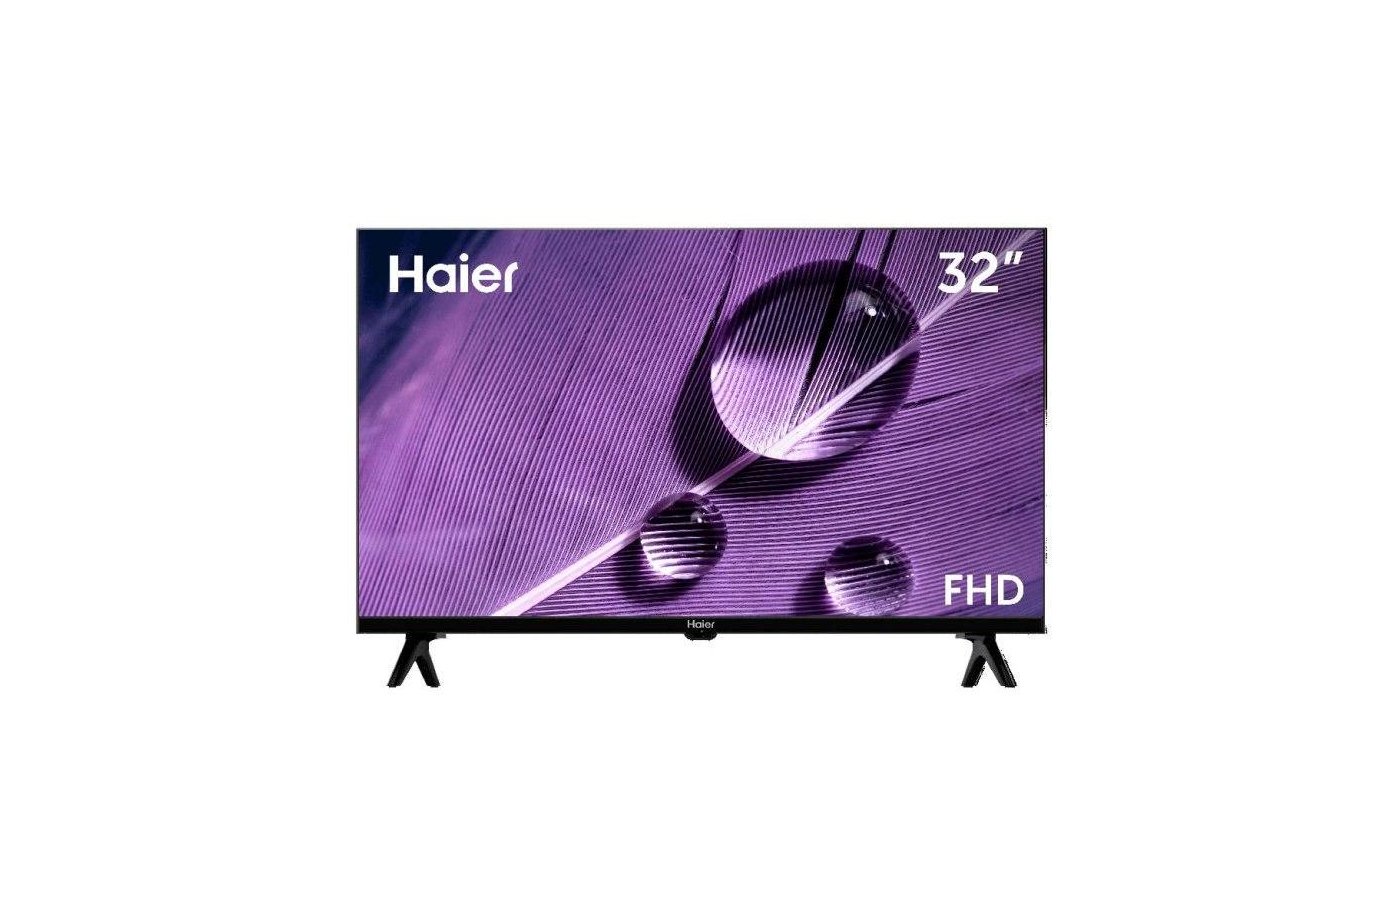 Телевизор haier 32 smart tv s1 отзыв. Haier 32 Smart TV s1. Телевизор Haier 55 Smart TV AX Pro. Haier 50 Smart TV AX Pro. Хаер телевизор 32 технические характеристики.